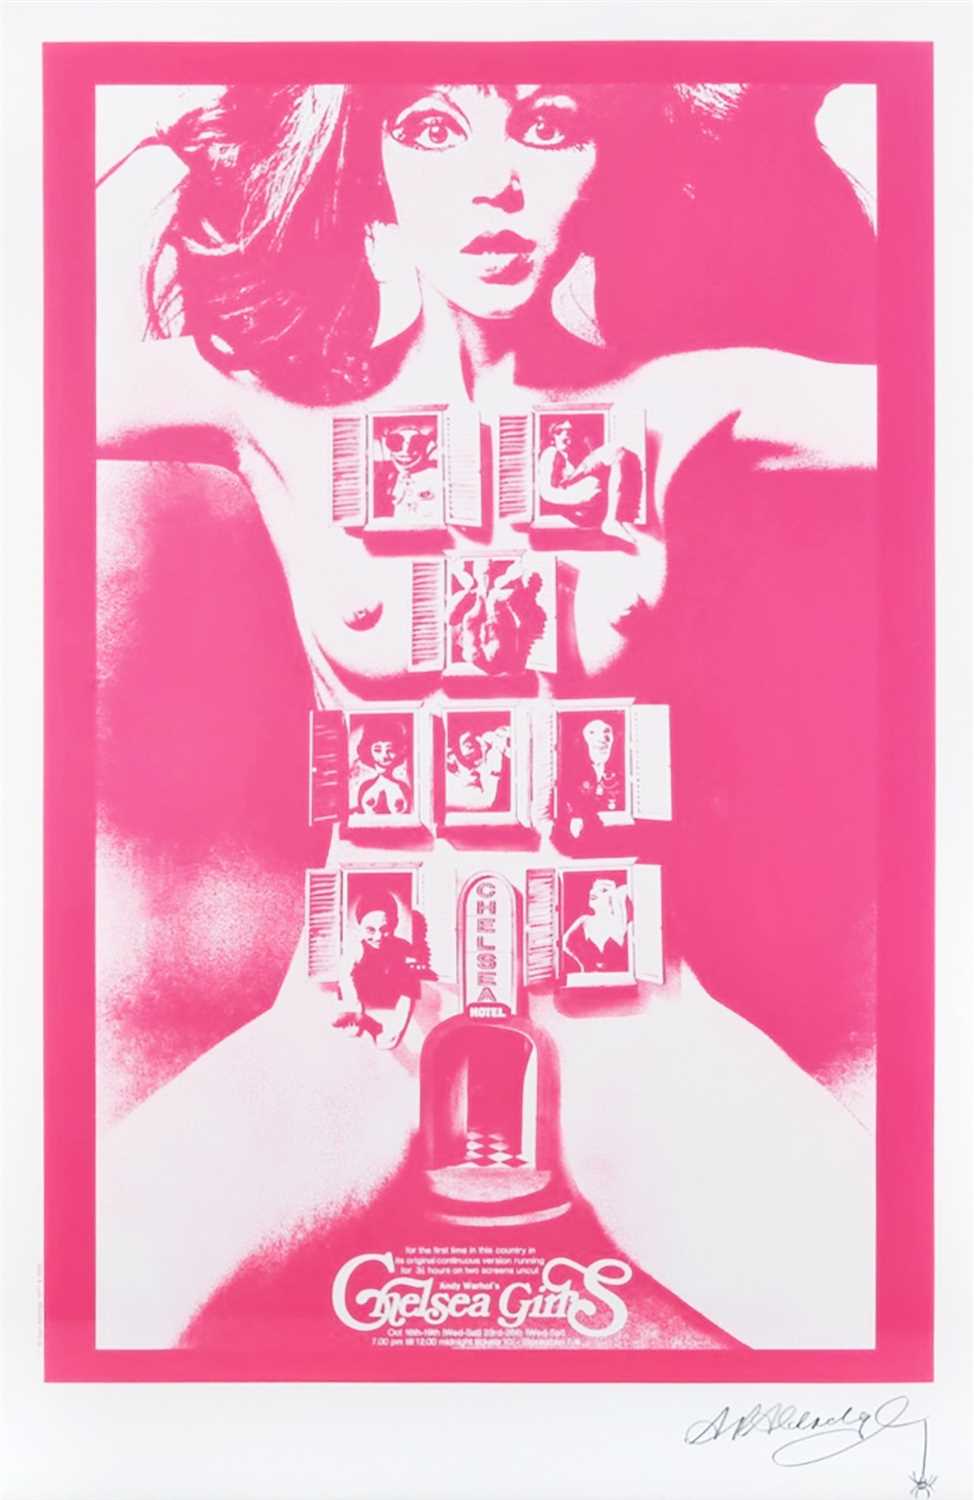 Lot 298 - Alan Aldridge (British 1943-2017), ‘Chelsea Girls (Pink)’, 2005